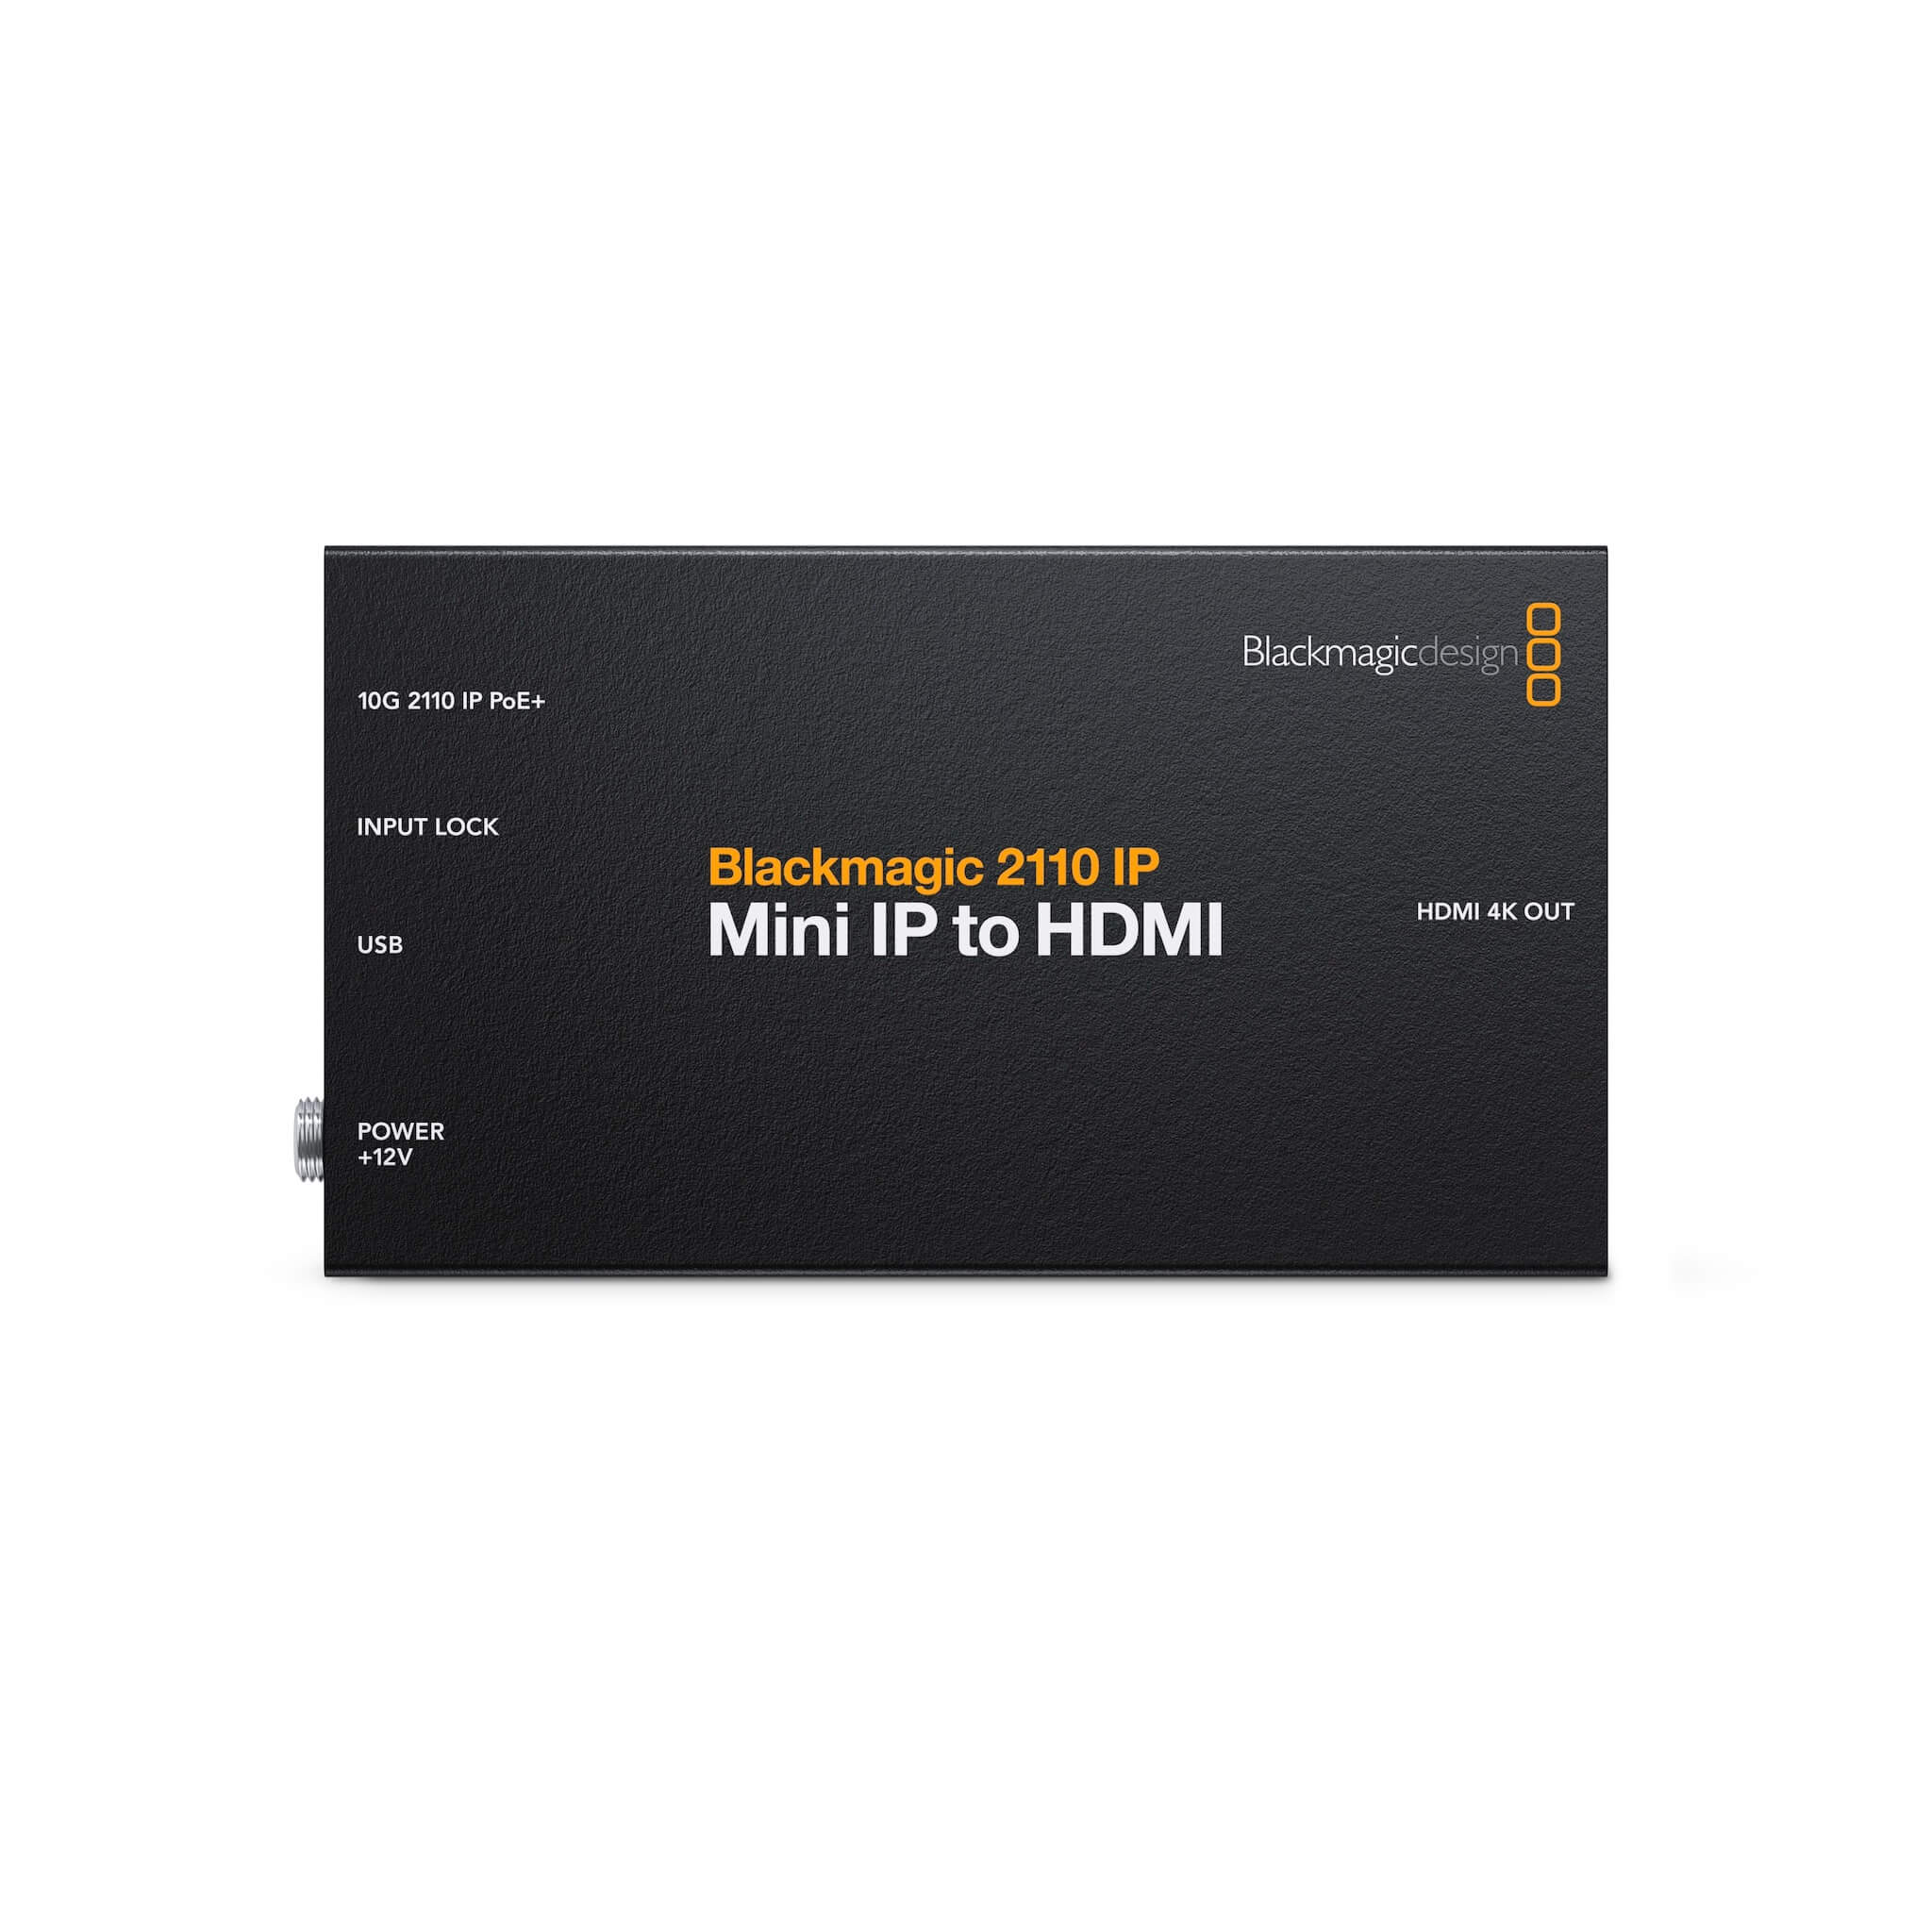 Blackmagic Design 2110 IP Mini IP to HDMI, top